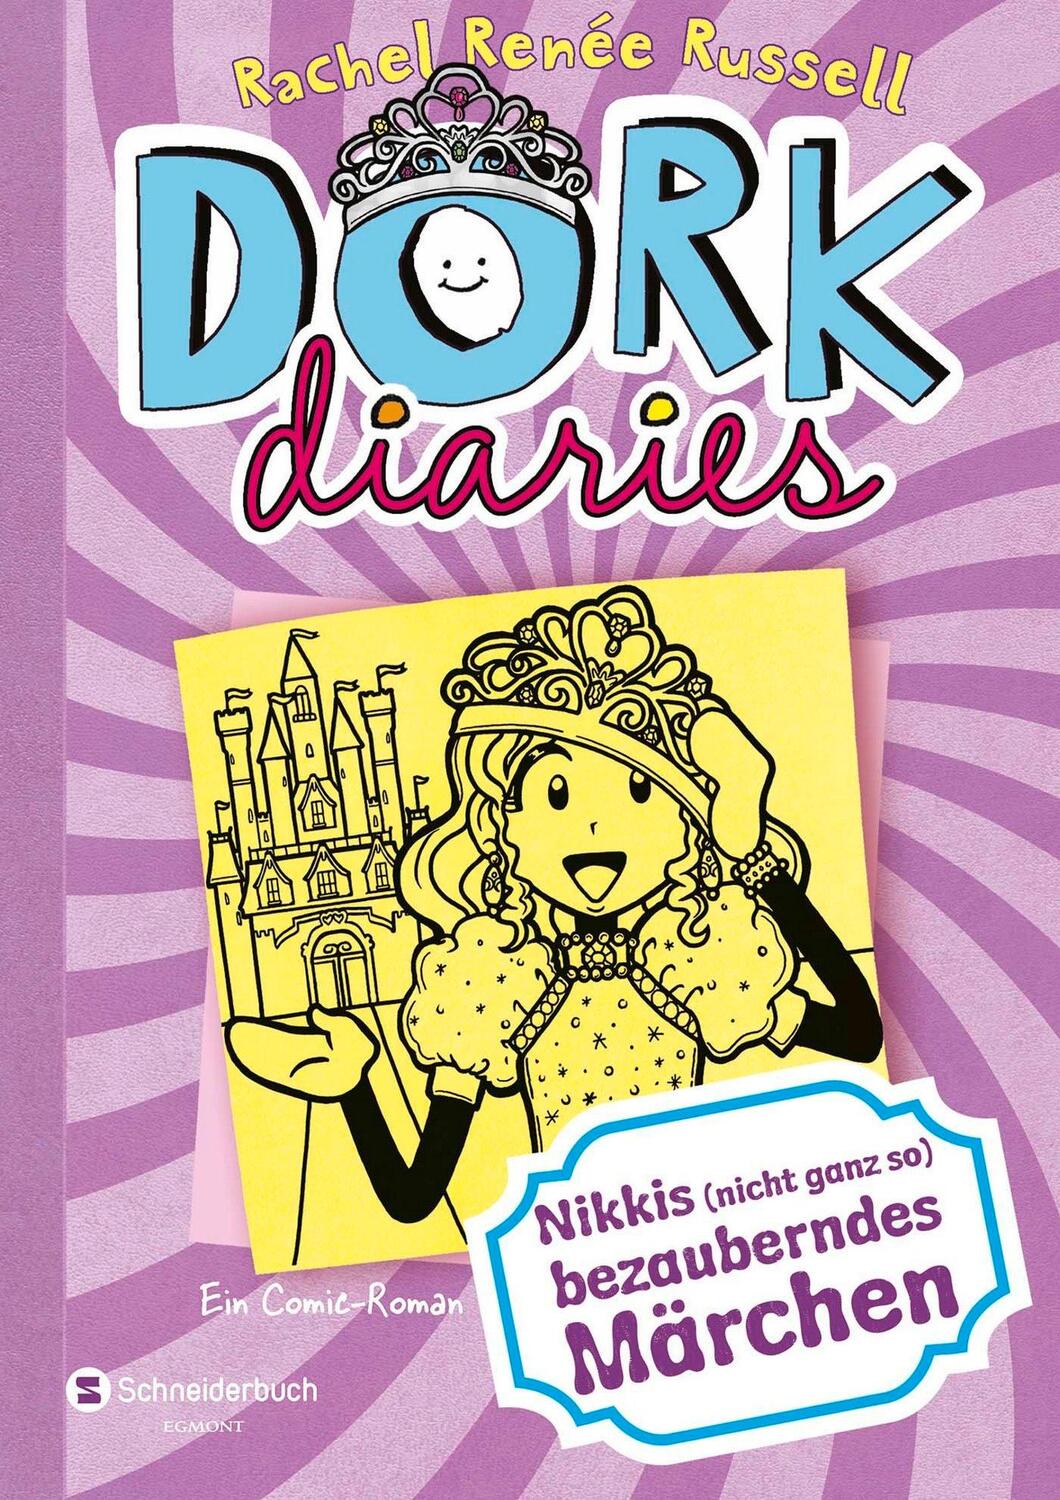 DORK Diaries 08. Nikkis (nicht ganz so) bezauberndes Märchen - Russell, Rachel Renée